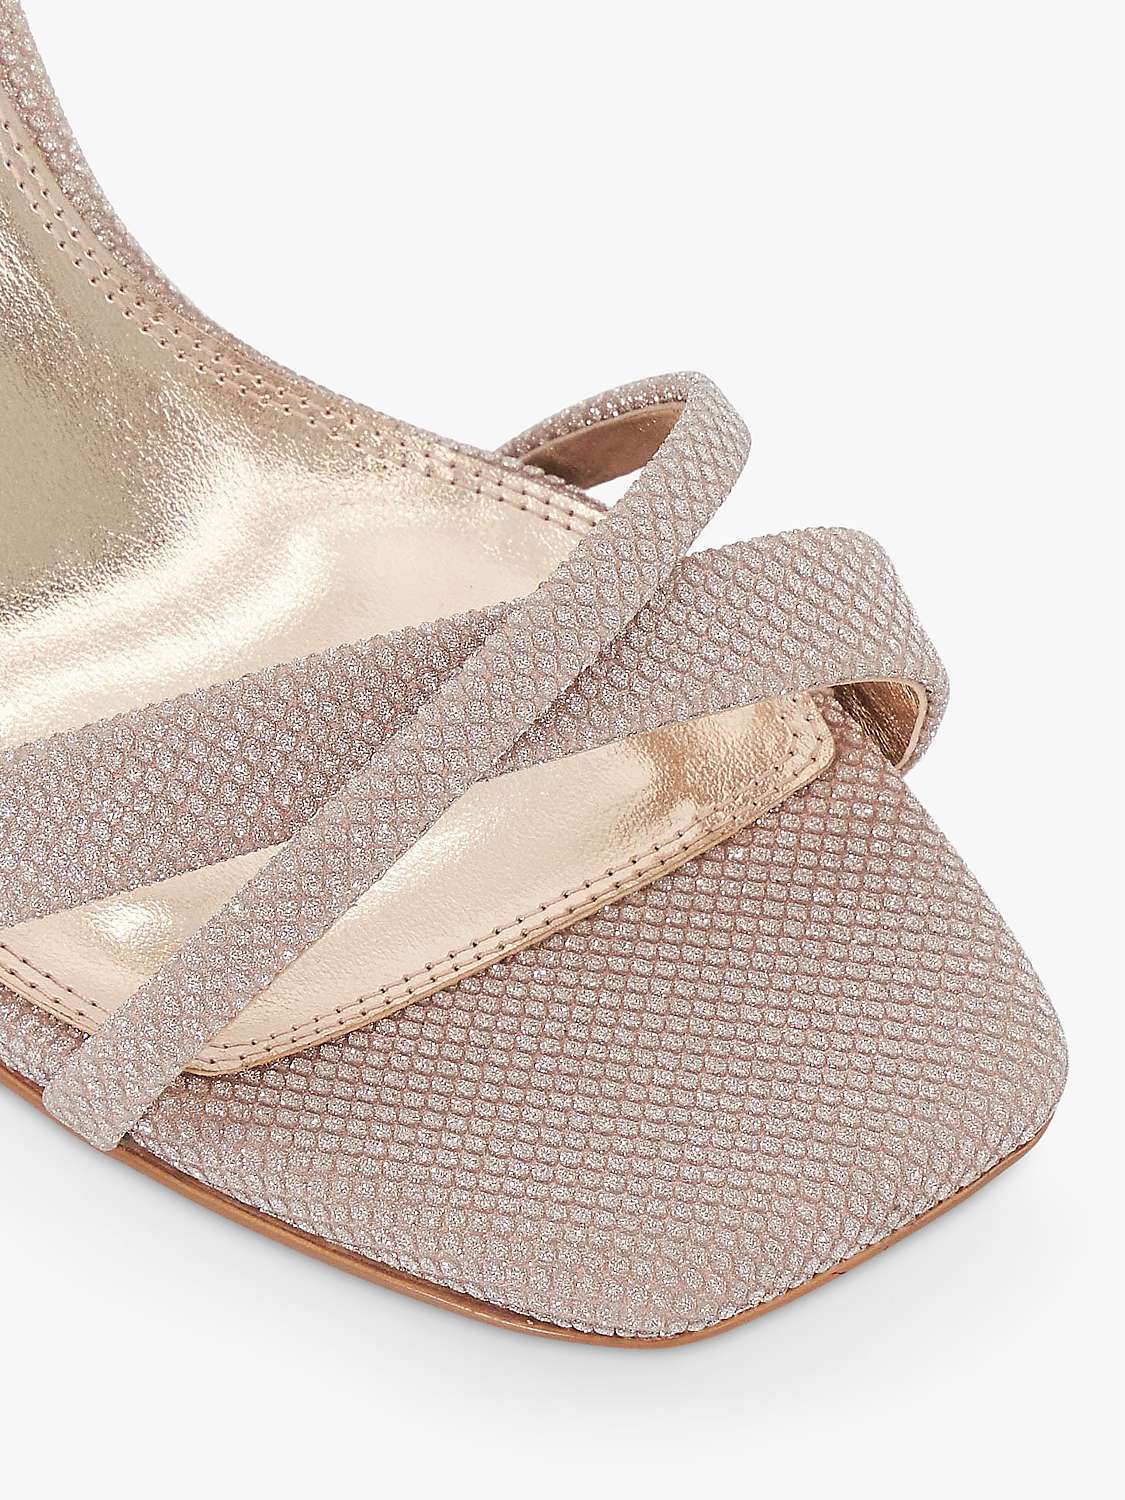 Buy Dune Madrina Textured Metallic Cross Strap Sandals, Rose Gold Online at johnlewis.com